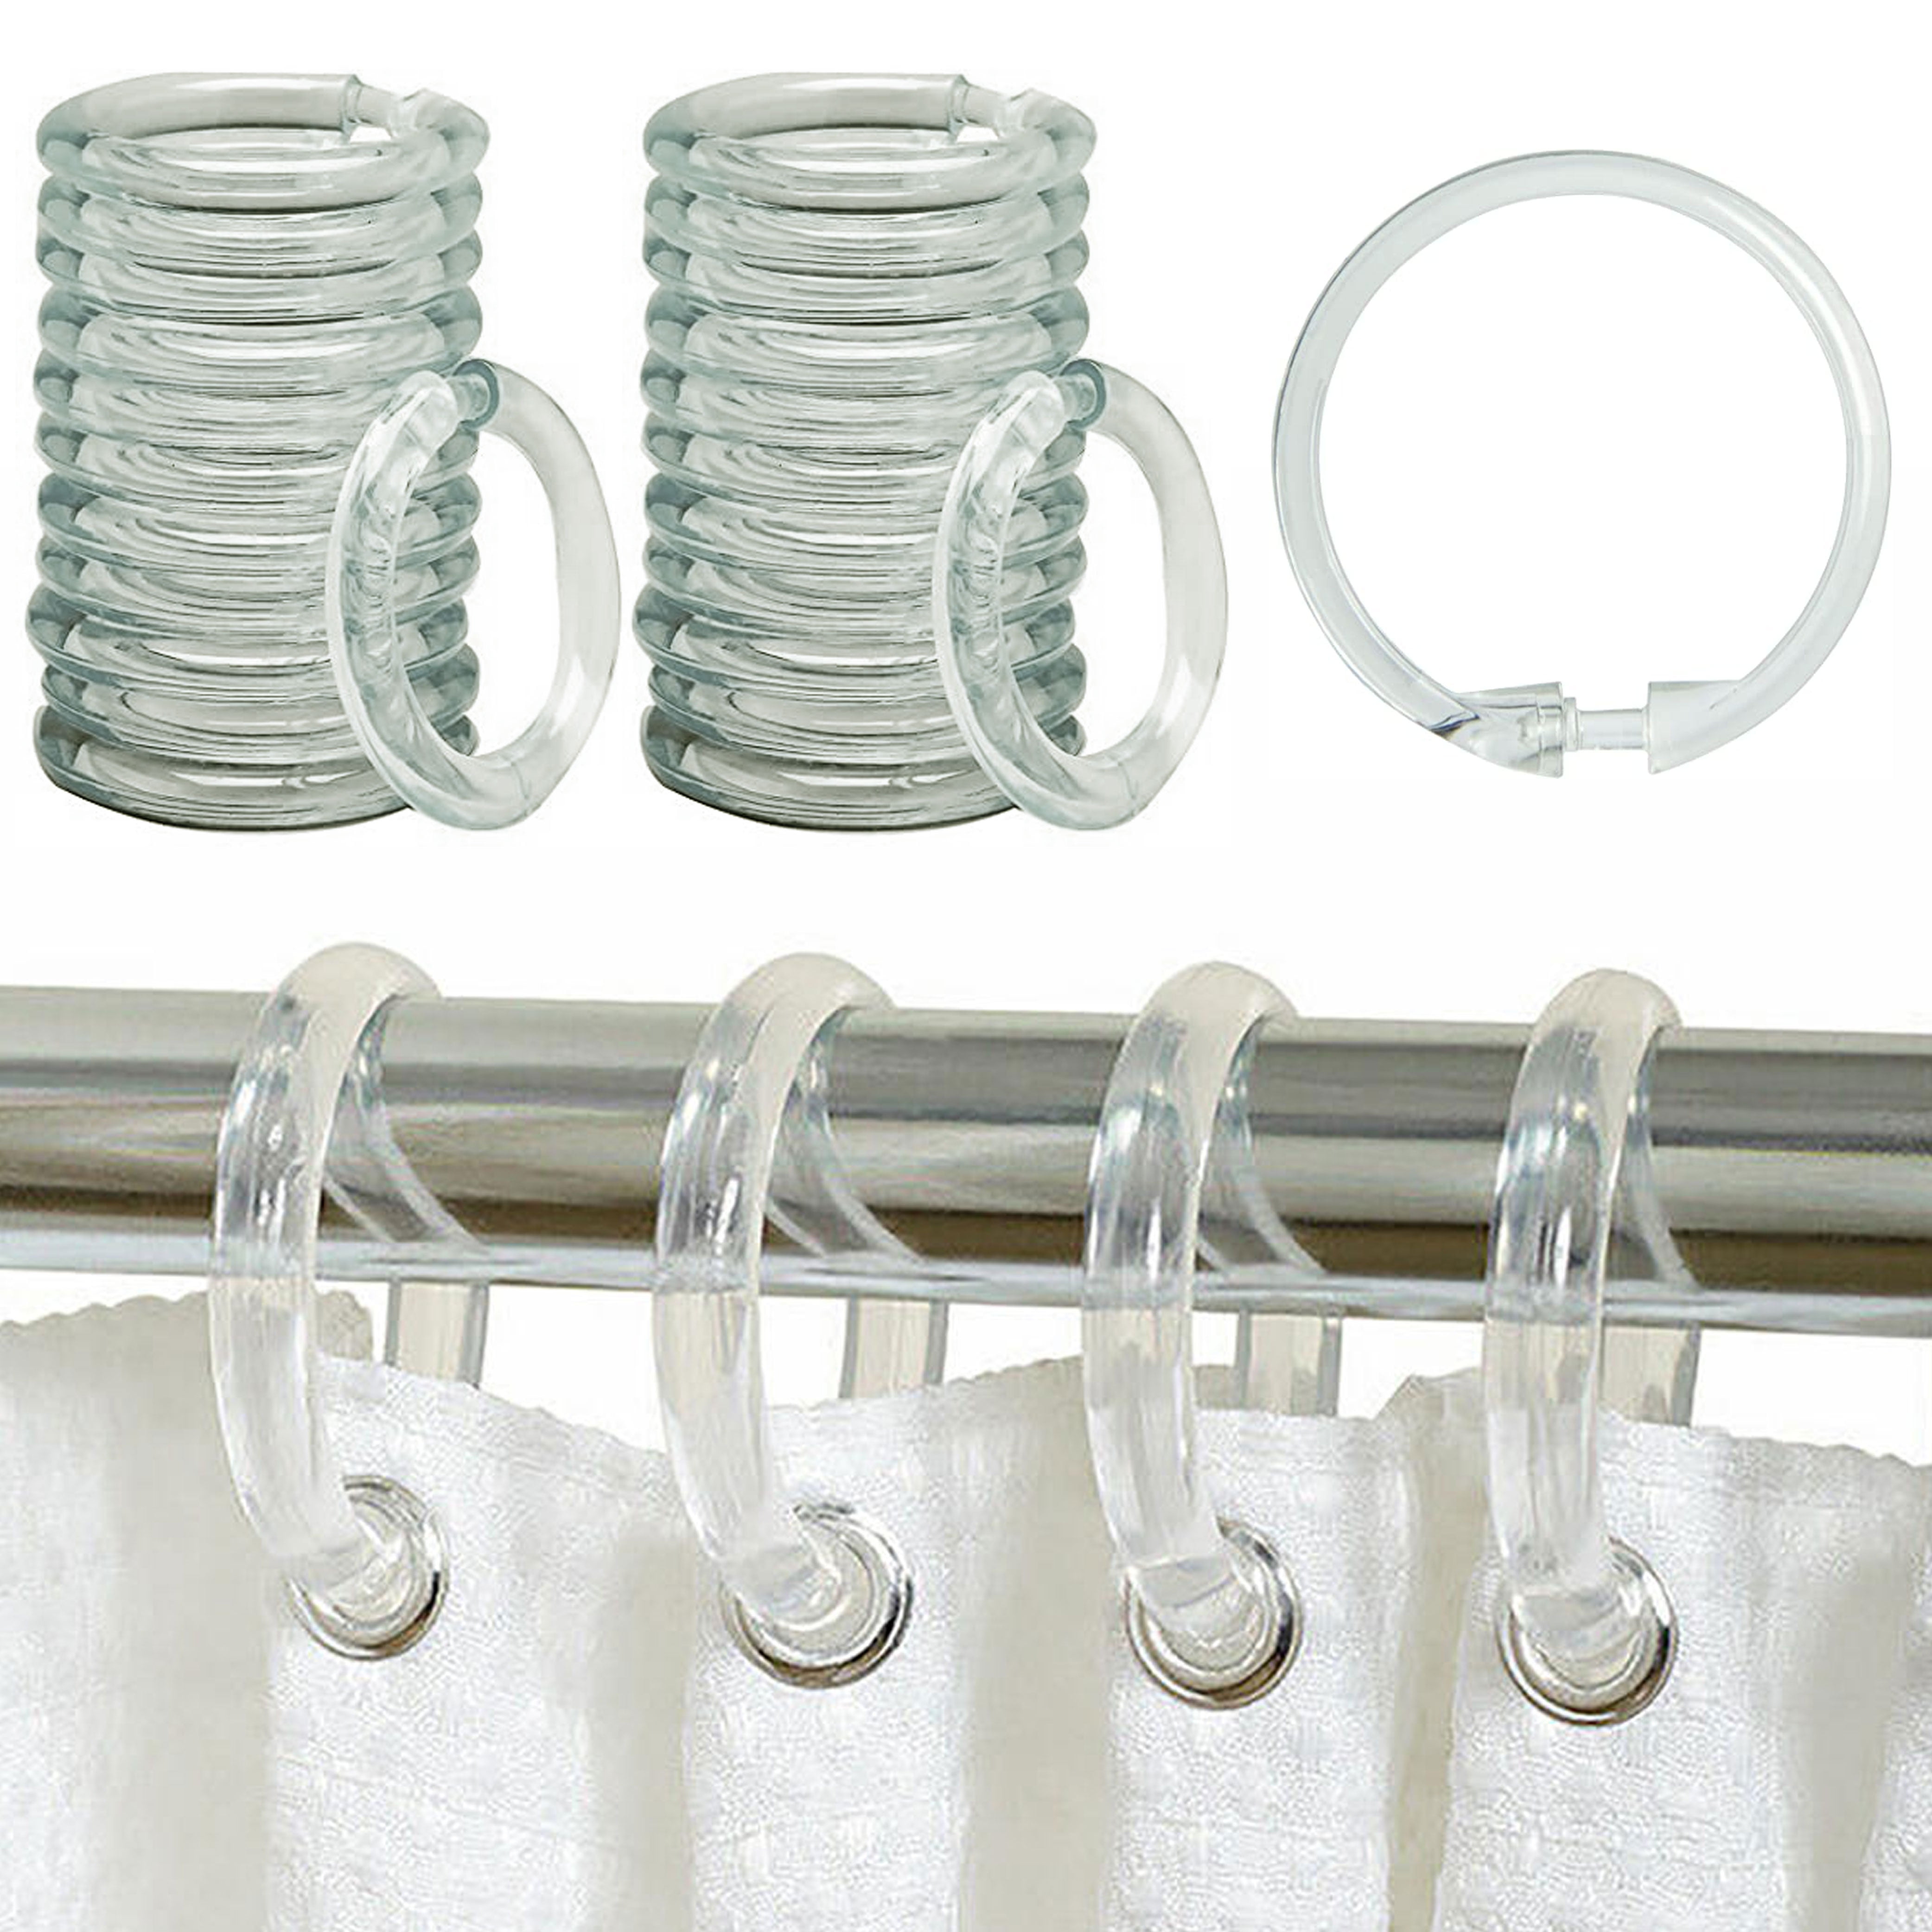 Shower Curtain Rings, 20pcs - 1.22 Inch Loose Leaf Binder Rings